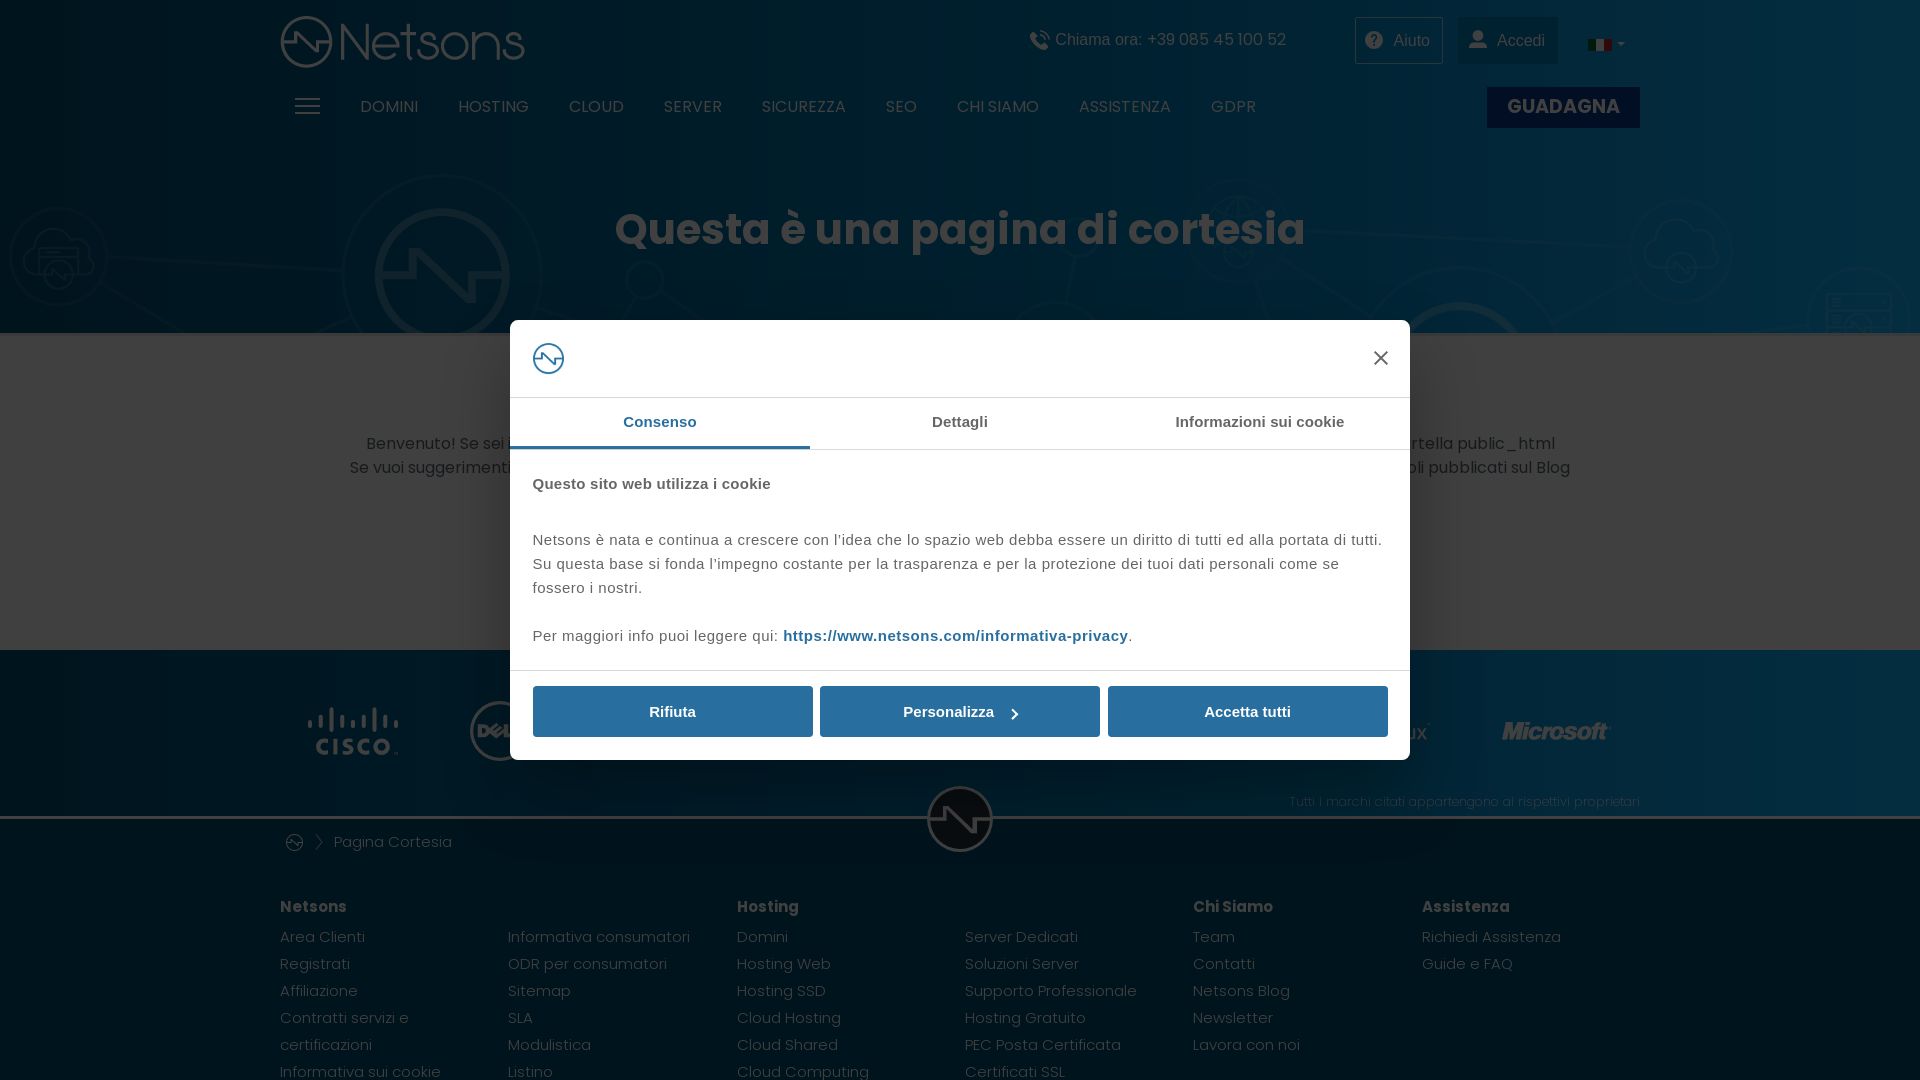 Website status enricobianchi.it is   ONLINE